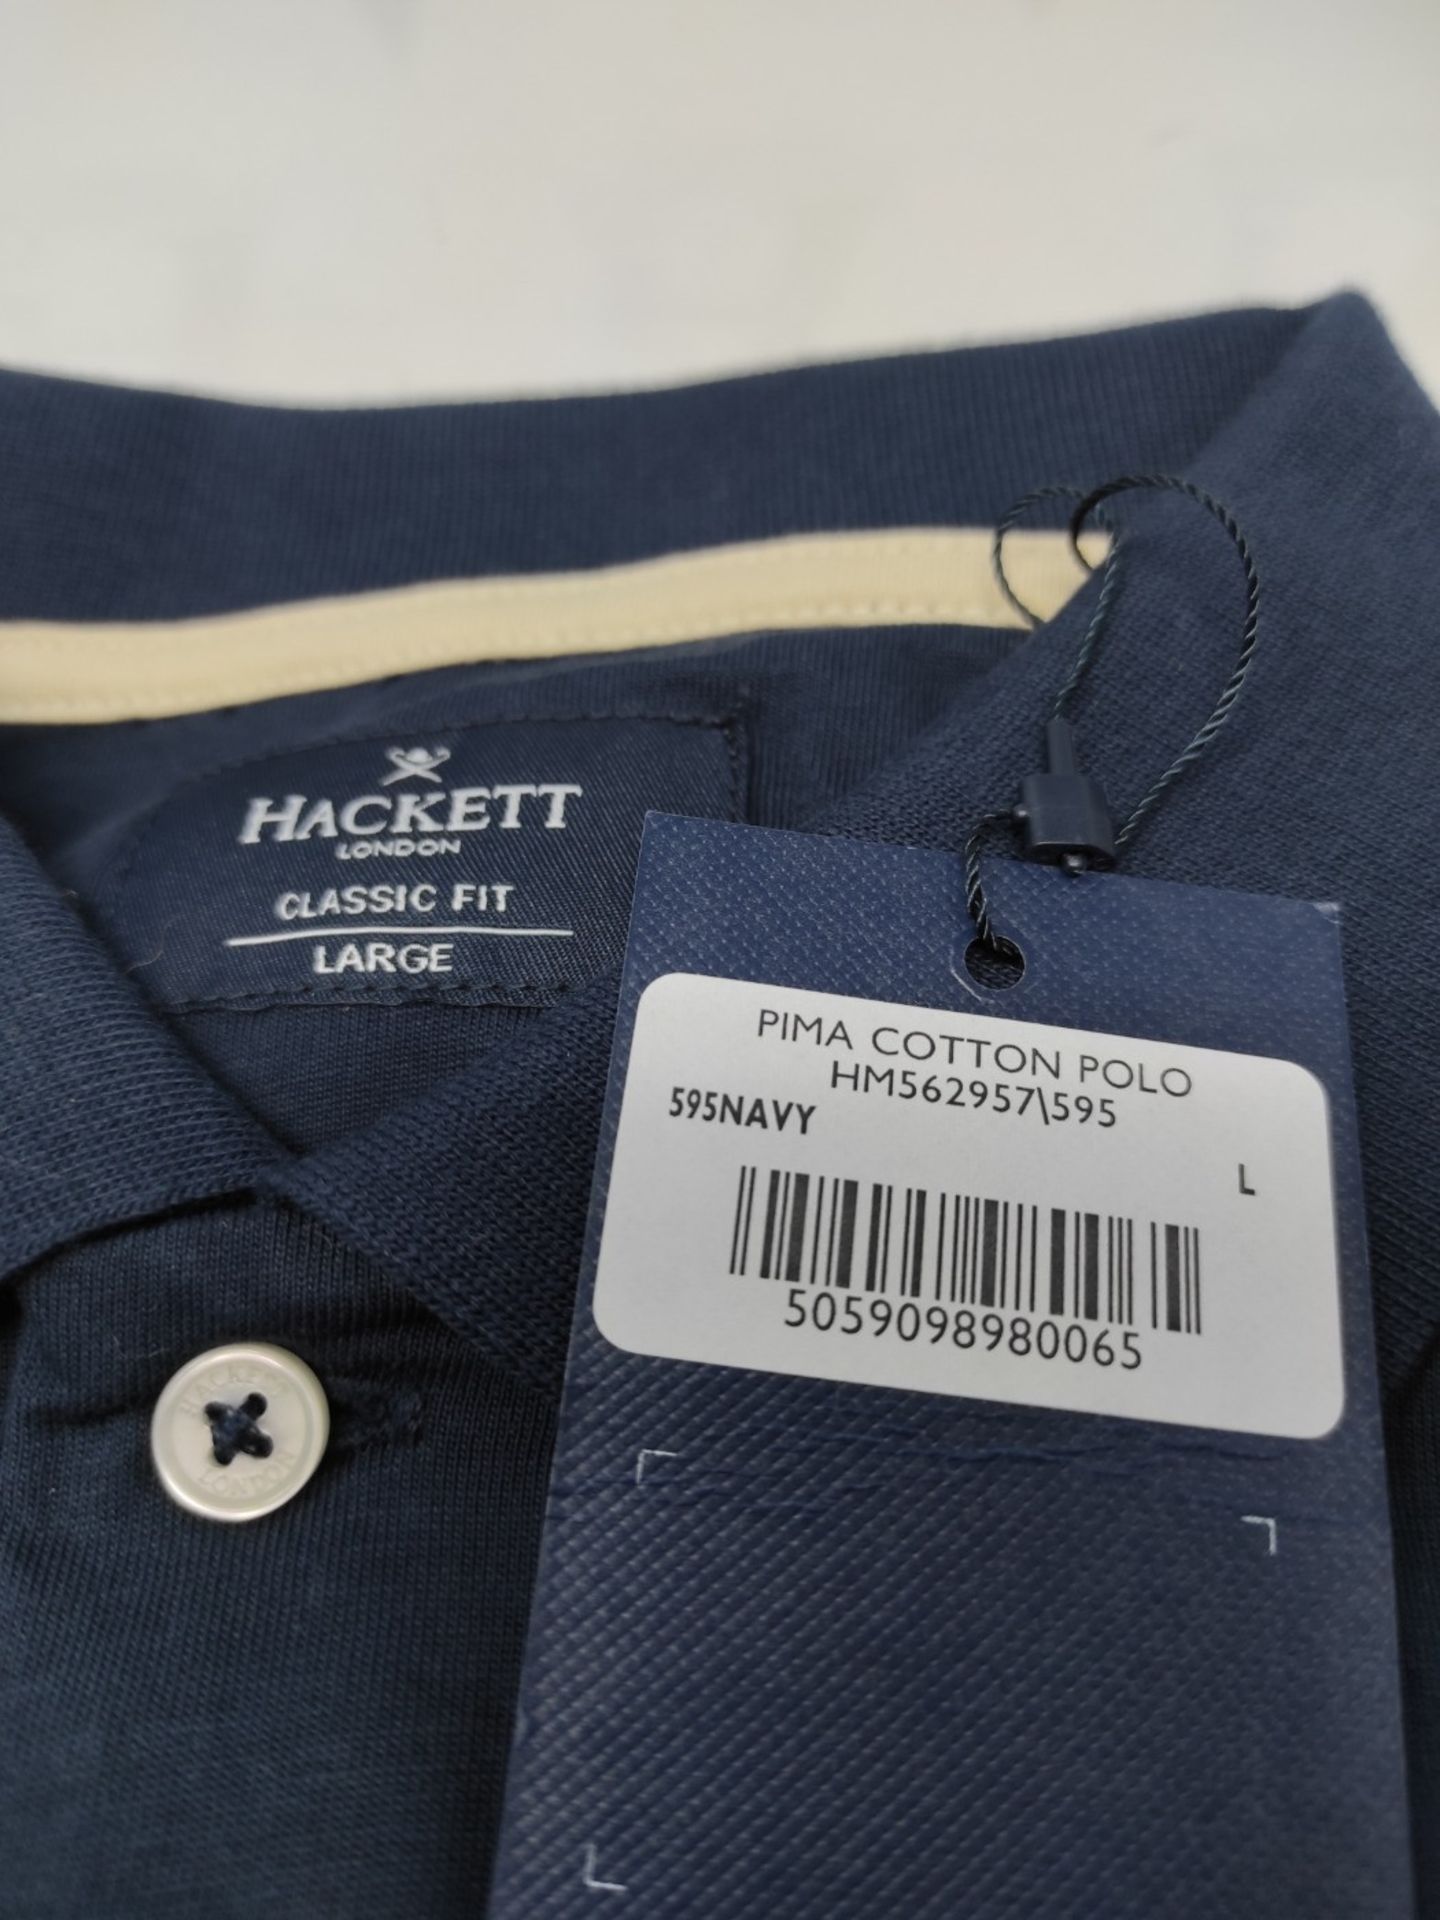 RRP £63.00 Hackett London Men's Pima Cotton Polo Shirt, 595navy, L - Bild 3 aus 3